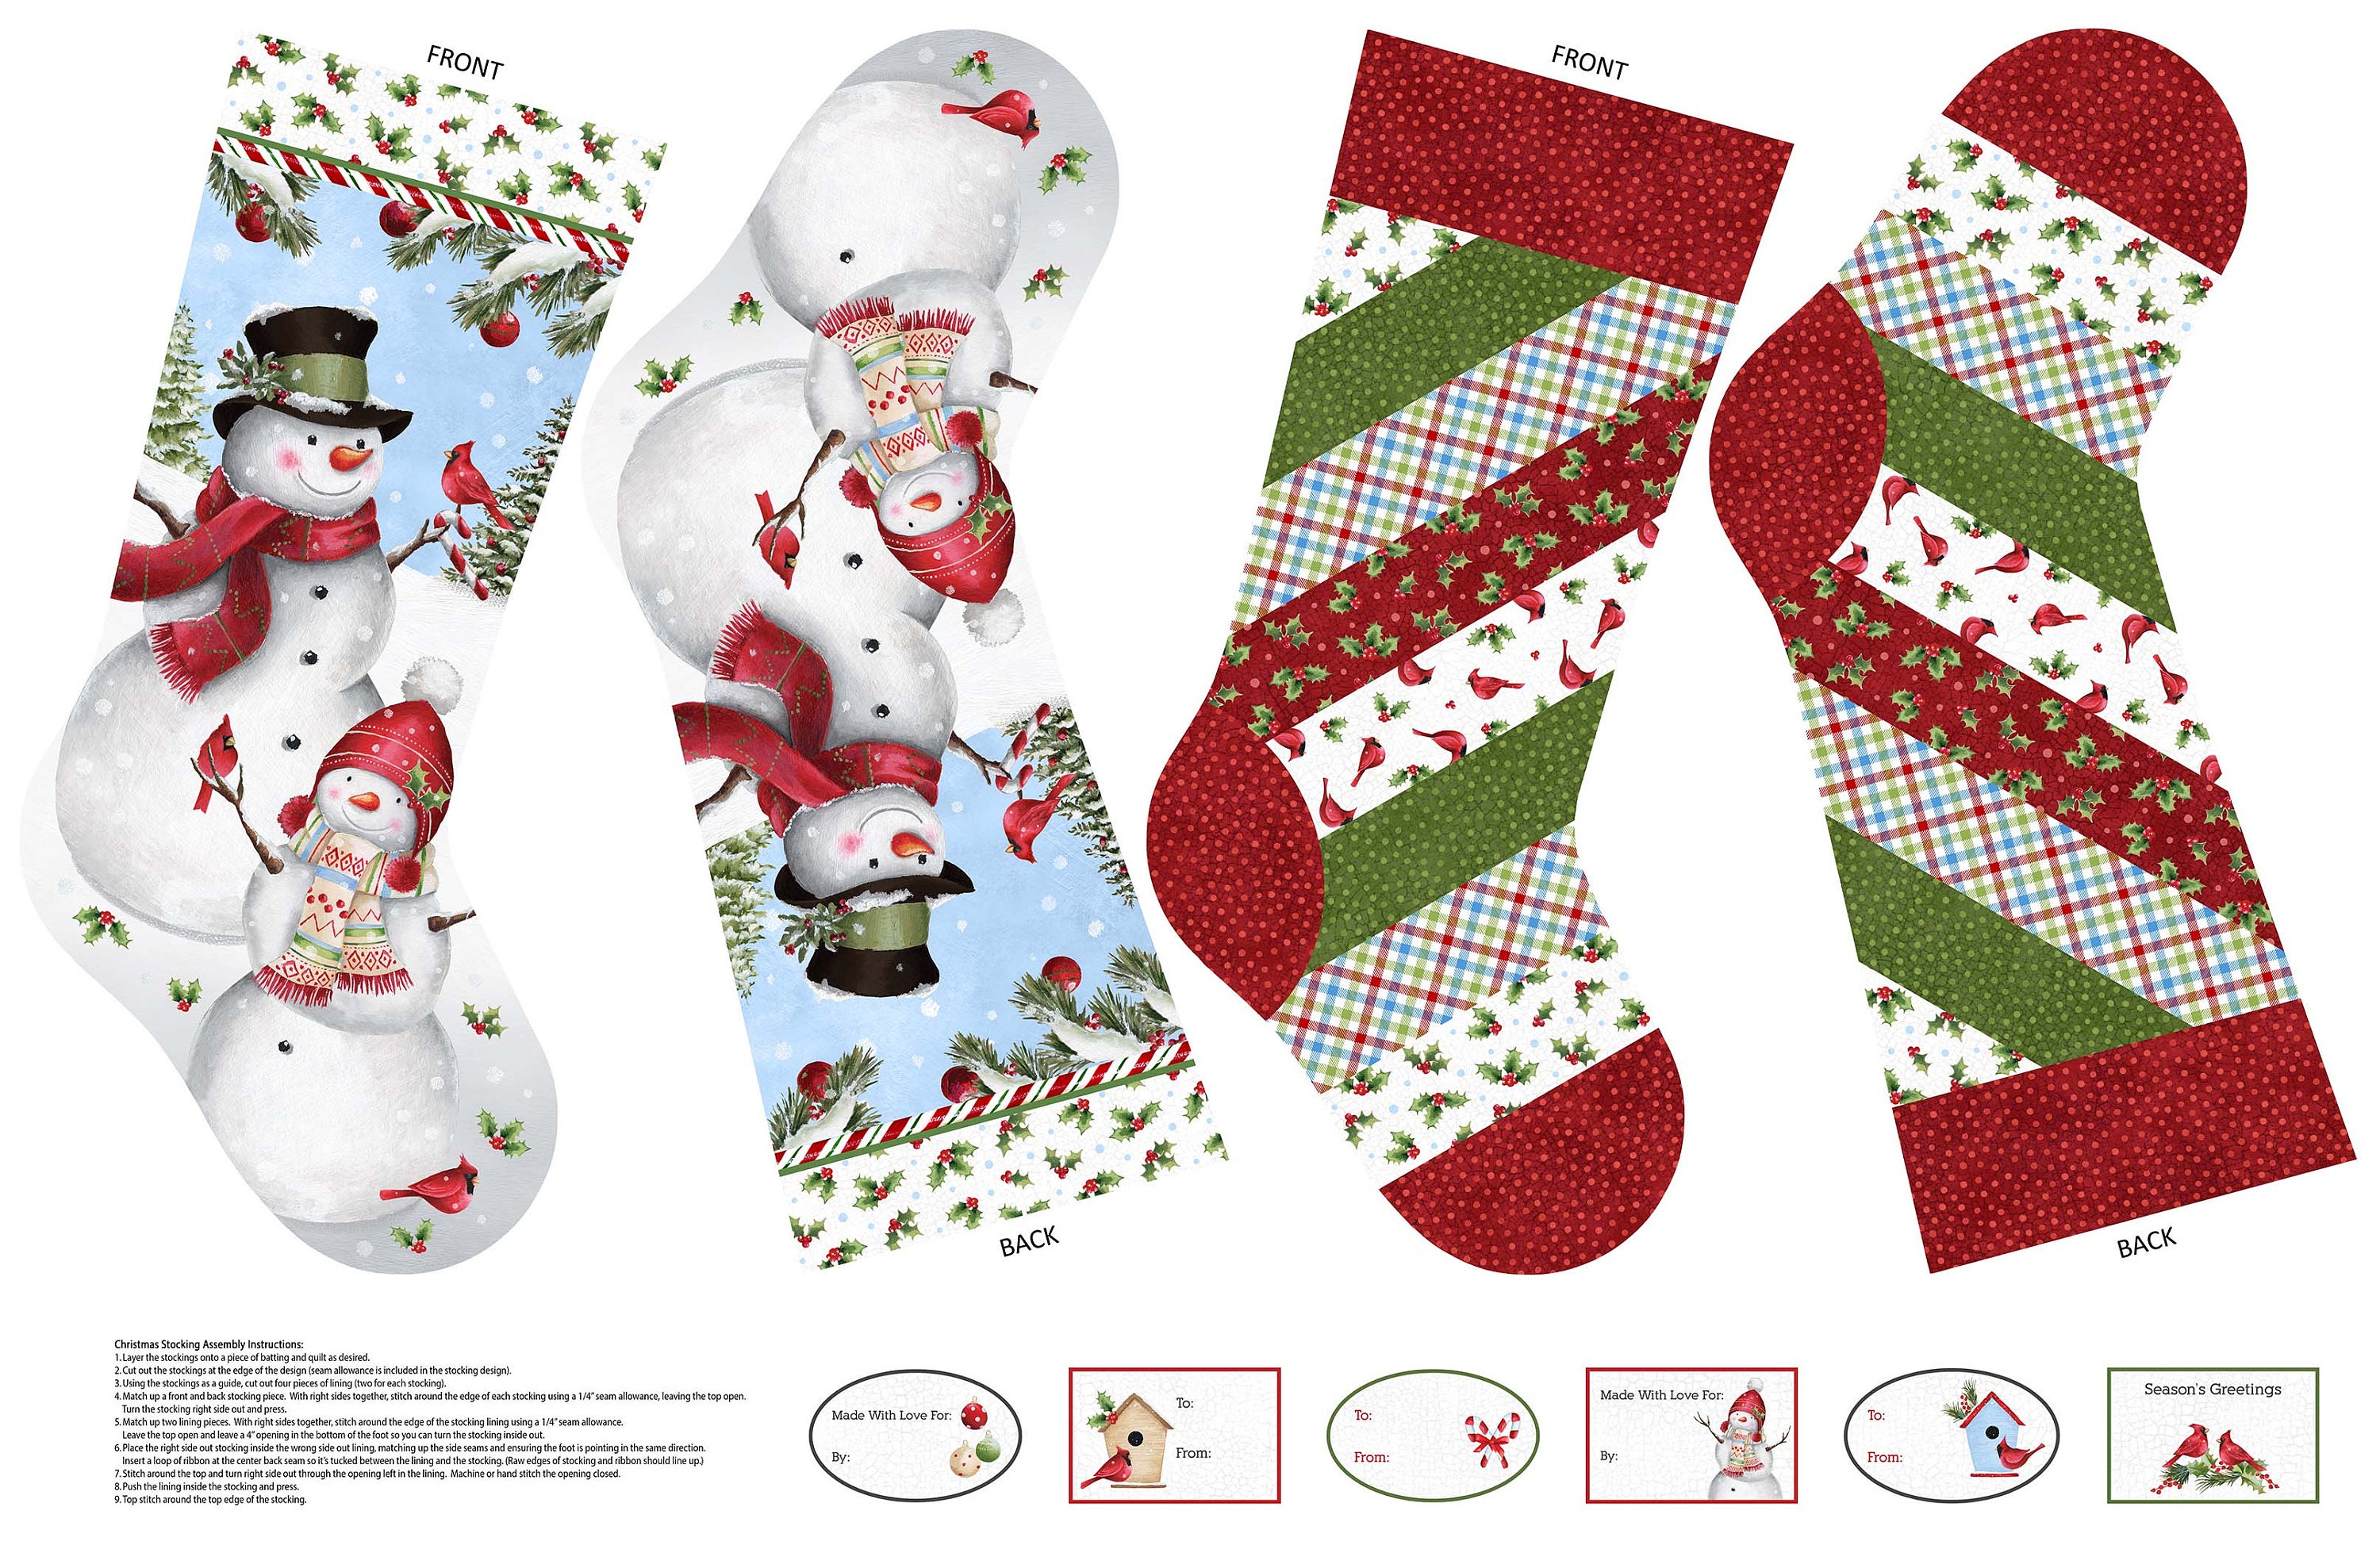 Christmas Stocking Name Tag Sewing Pattern — Pin Cut Sew Studio